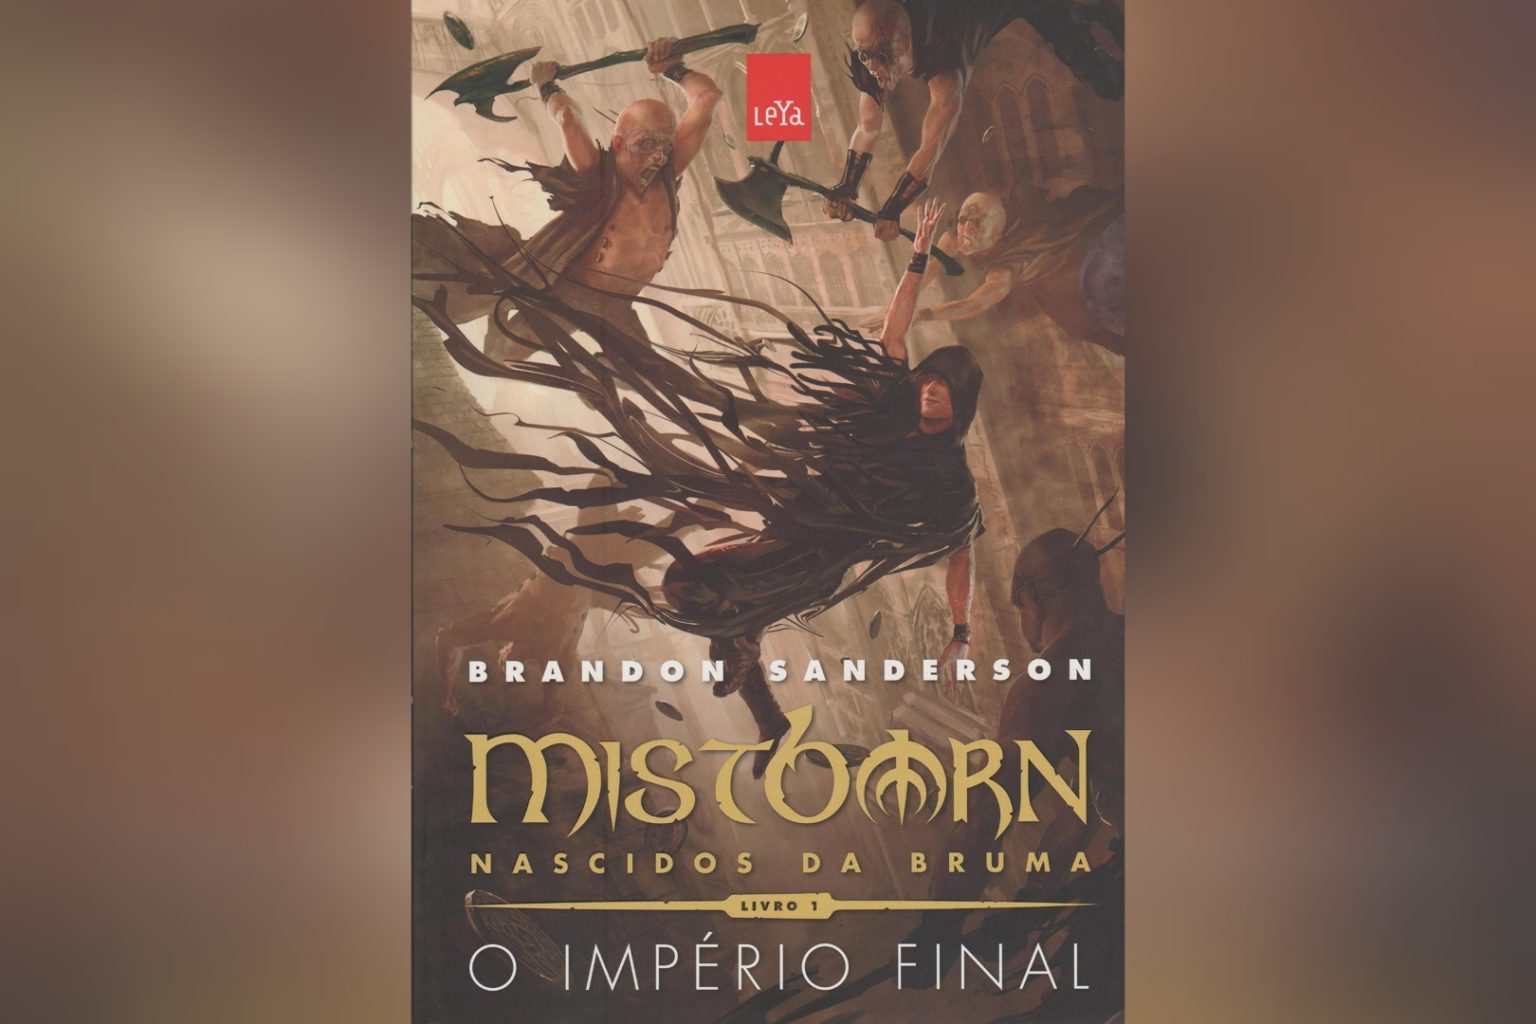 O Império Final: Mistborn Primeira Era – livro 1 (Brandon Sanderson) | Resenha